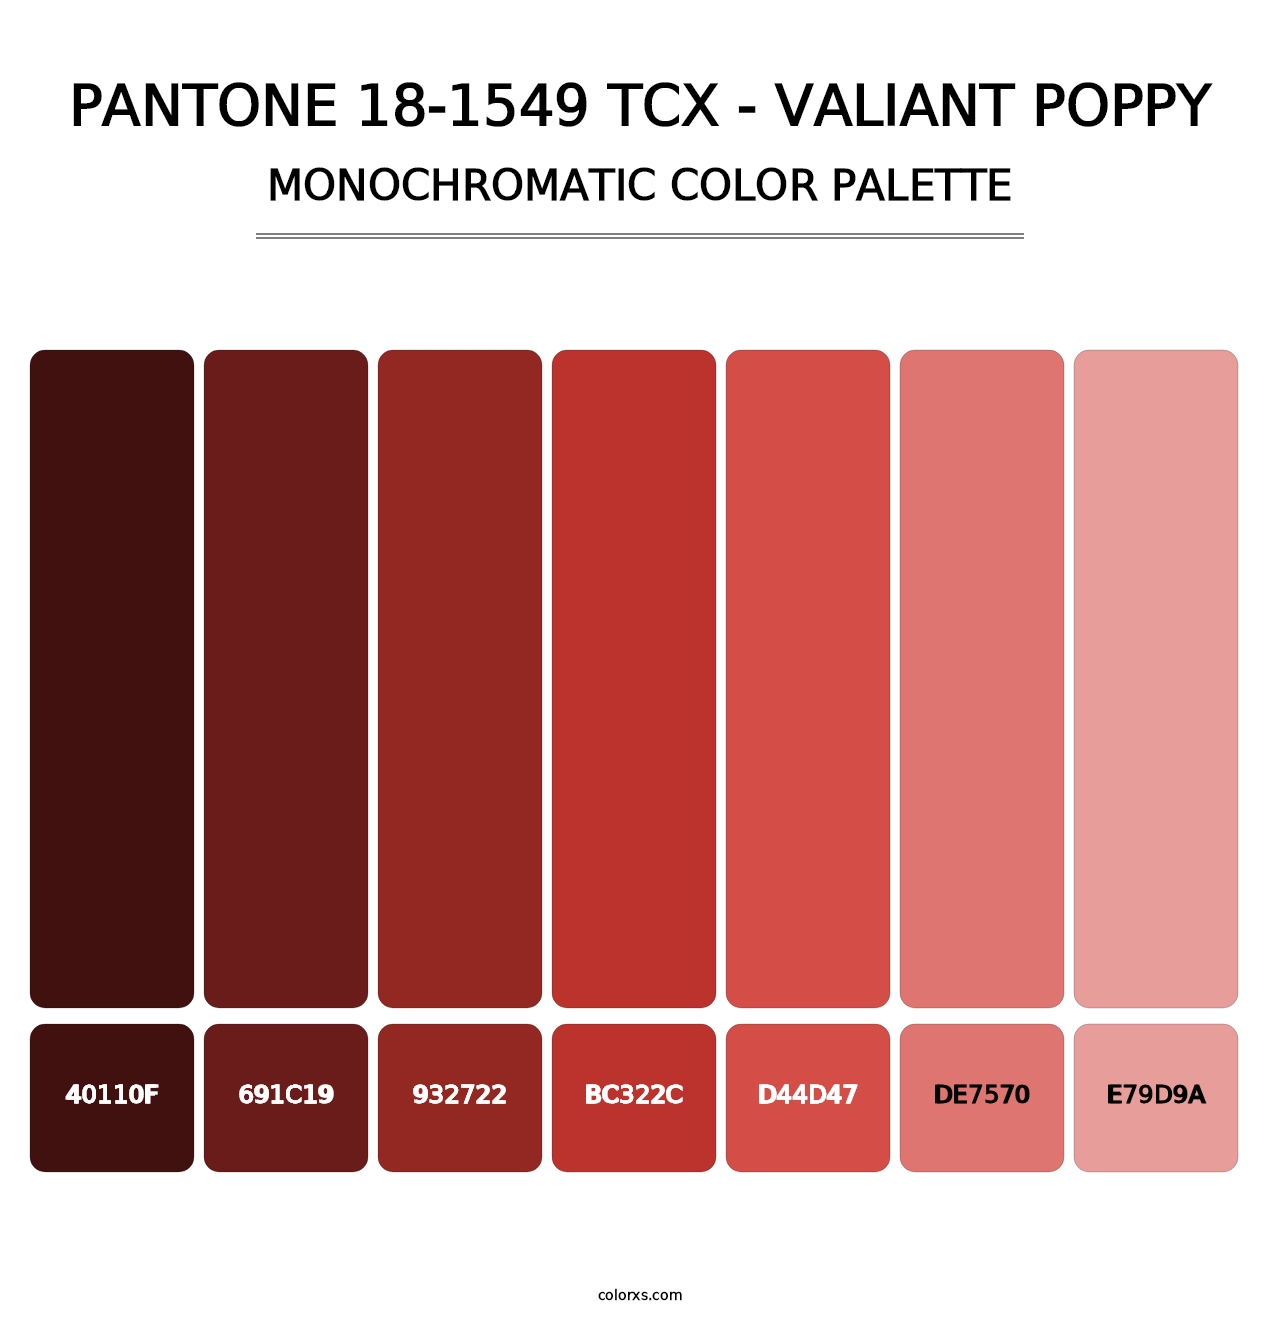 PANTONE 18-1549 TCX - Valiant Poppy - Monochromatic Color Palette